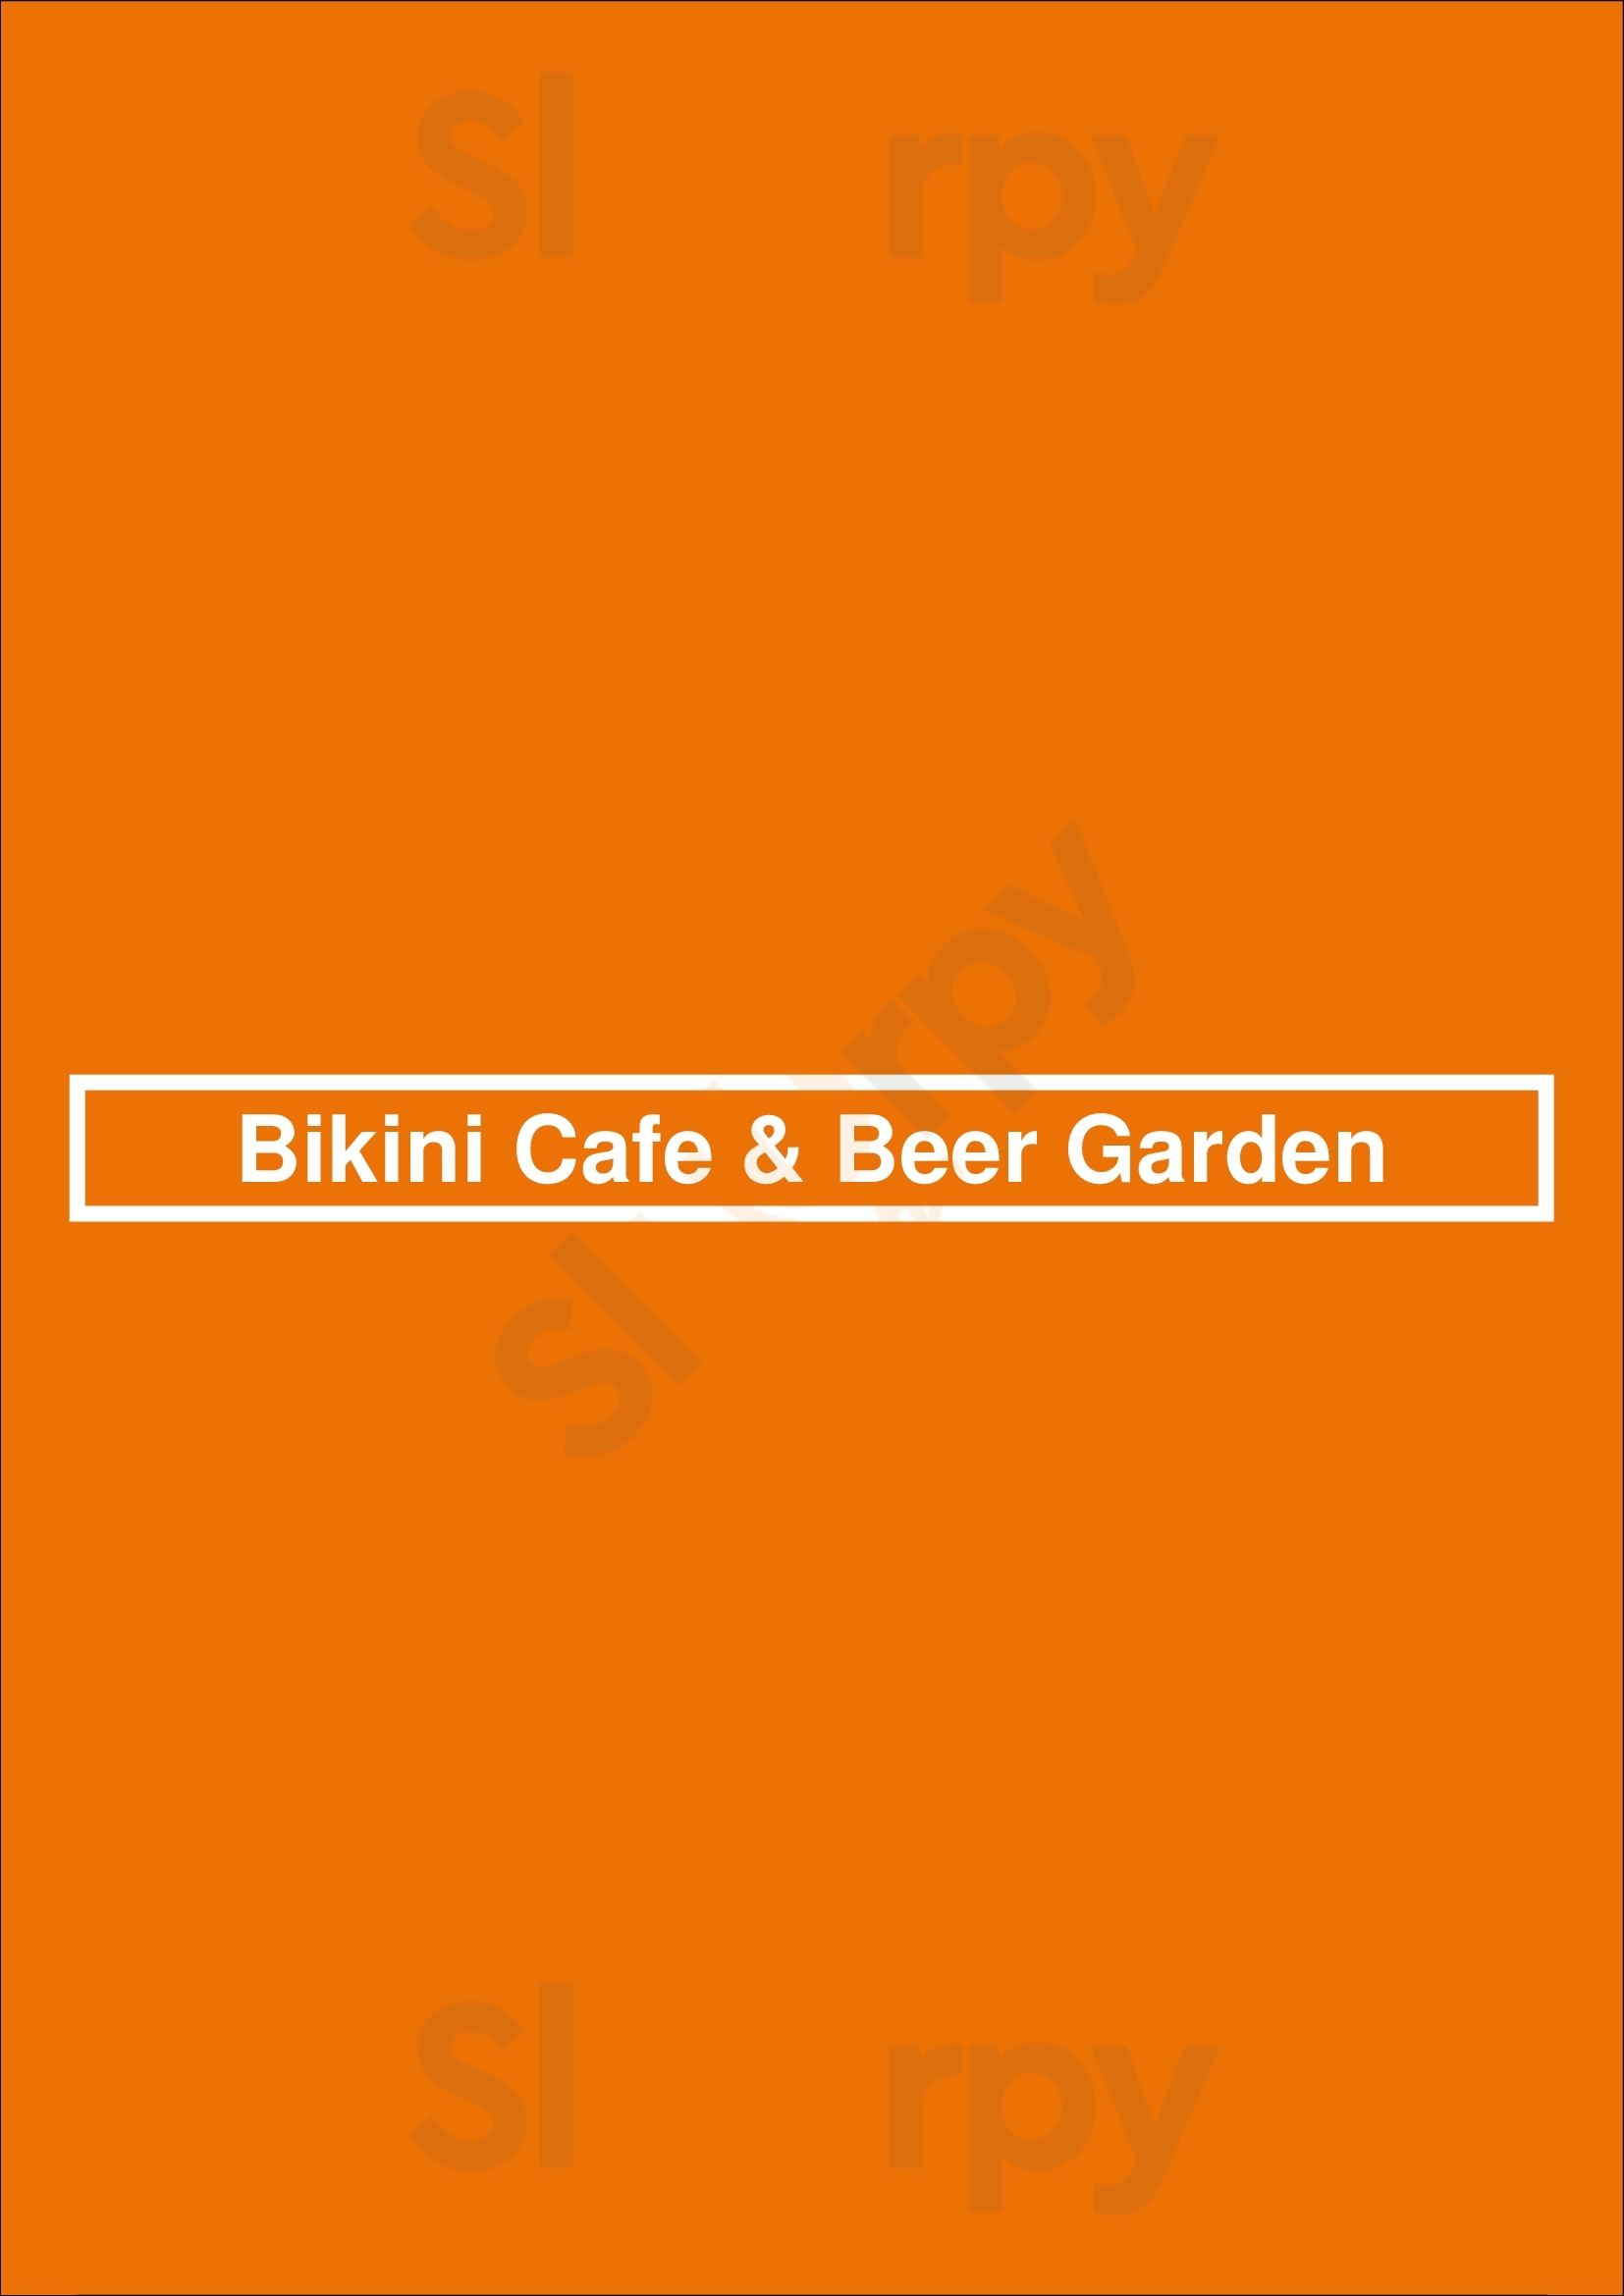 Bikini Cafe & Beer Garden Miami Beach Menu - 1